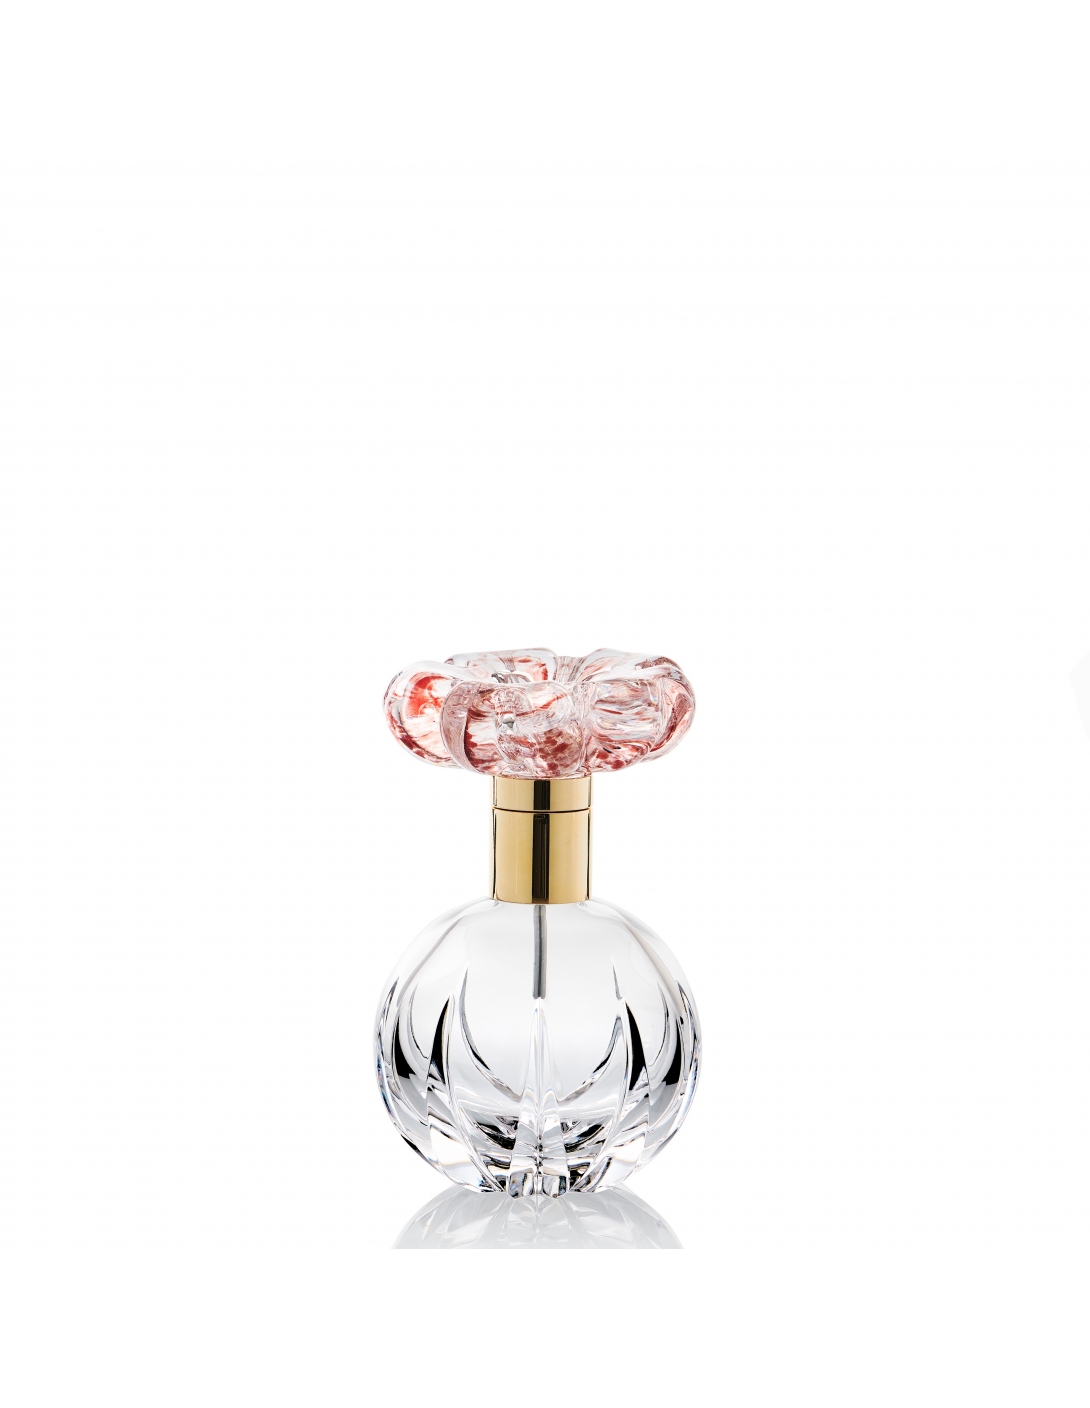 Cistus Luna perfume bottle